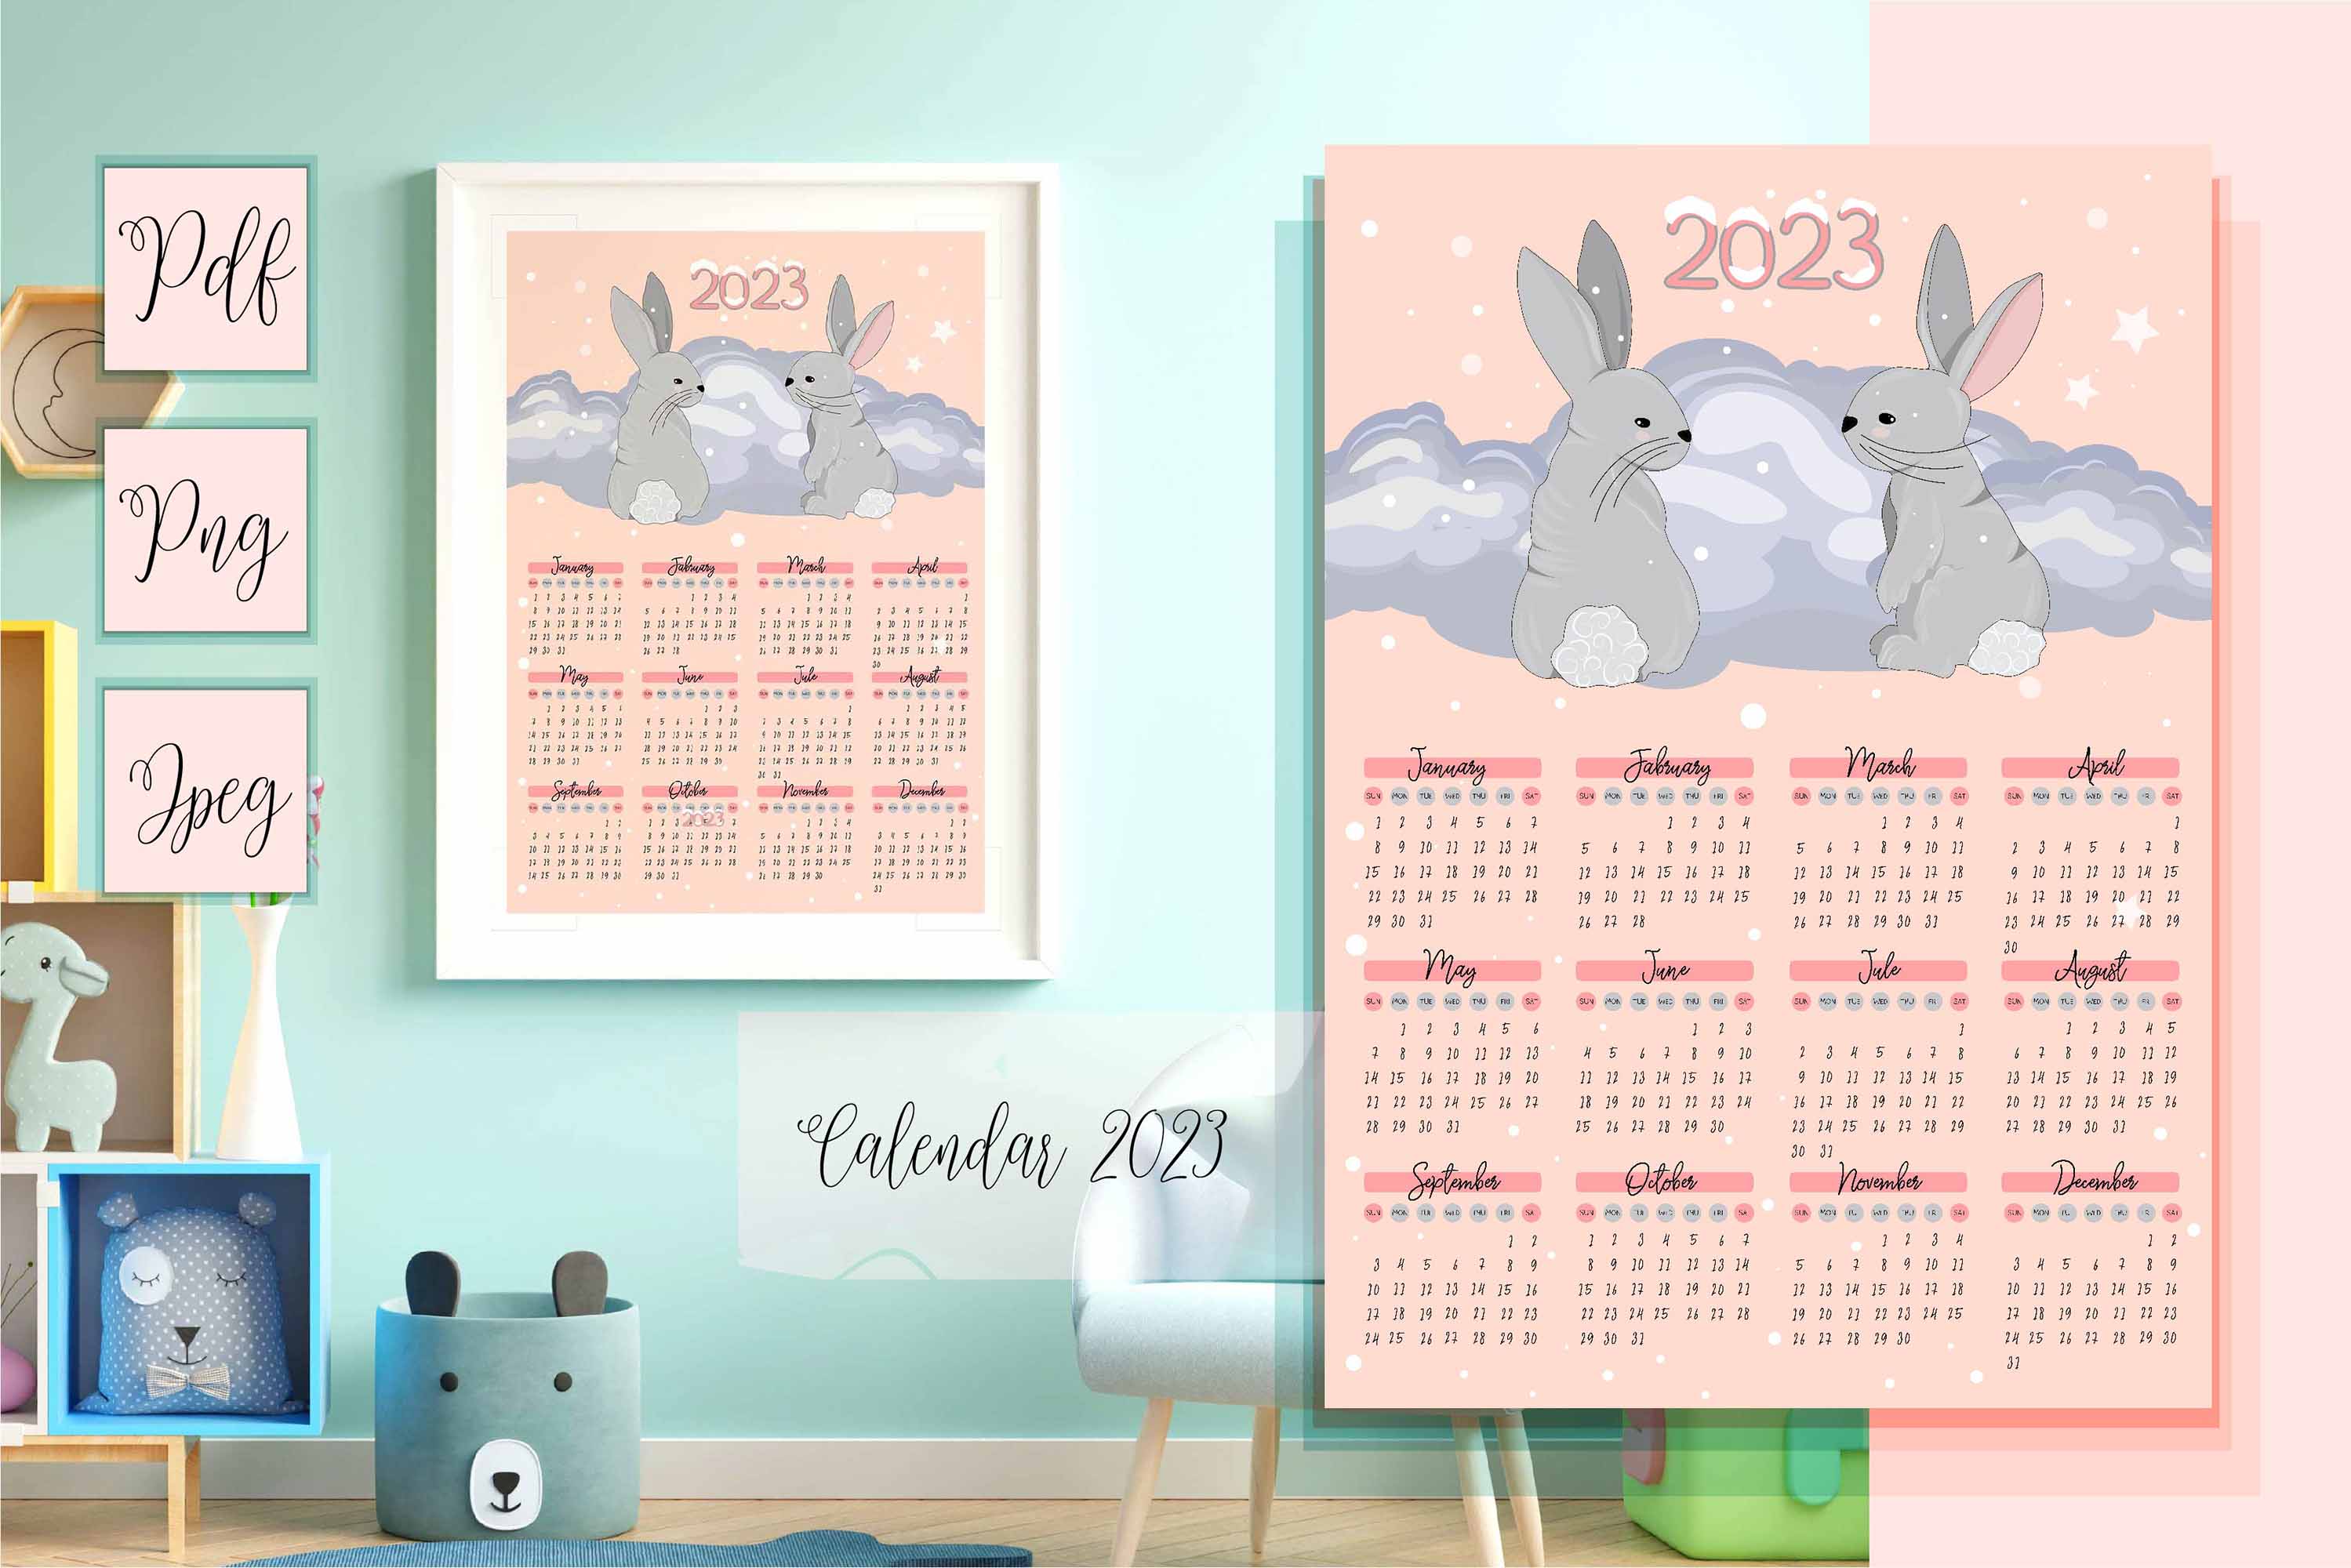 Calendar 2023 with Cute Rabbits facebook image.